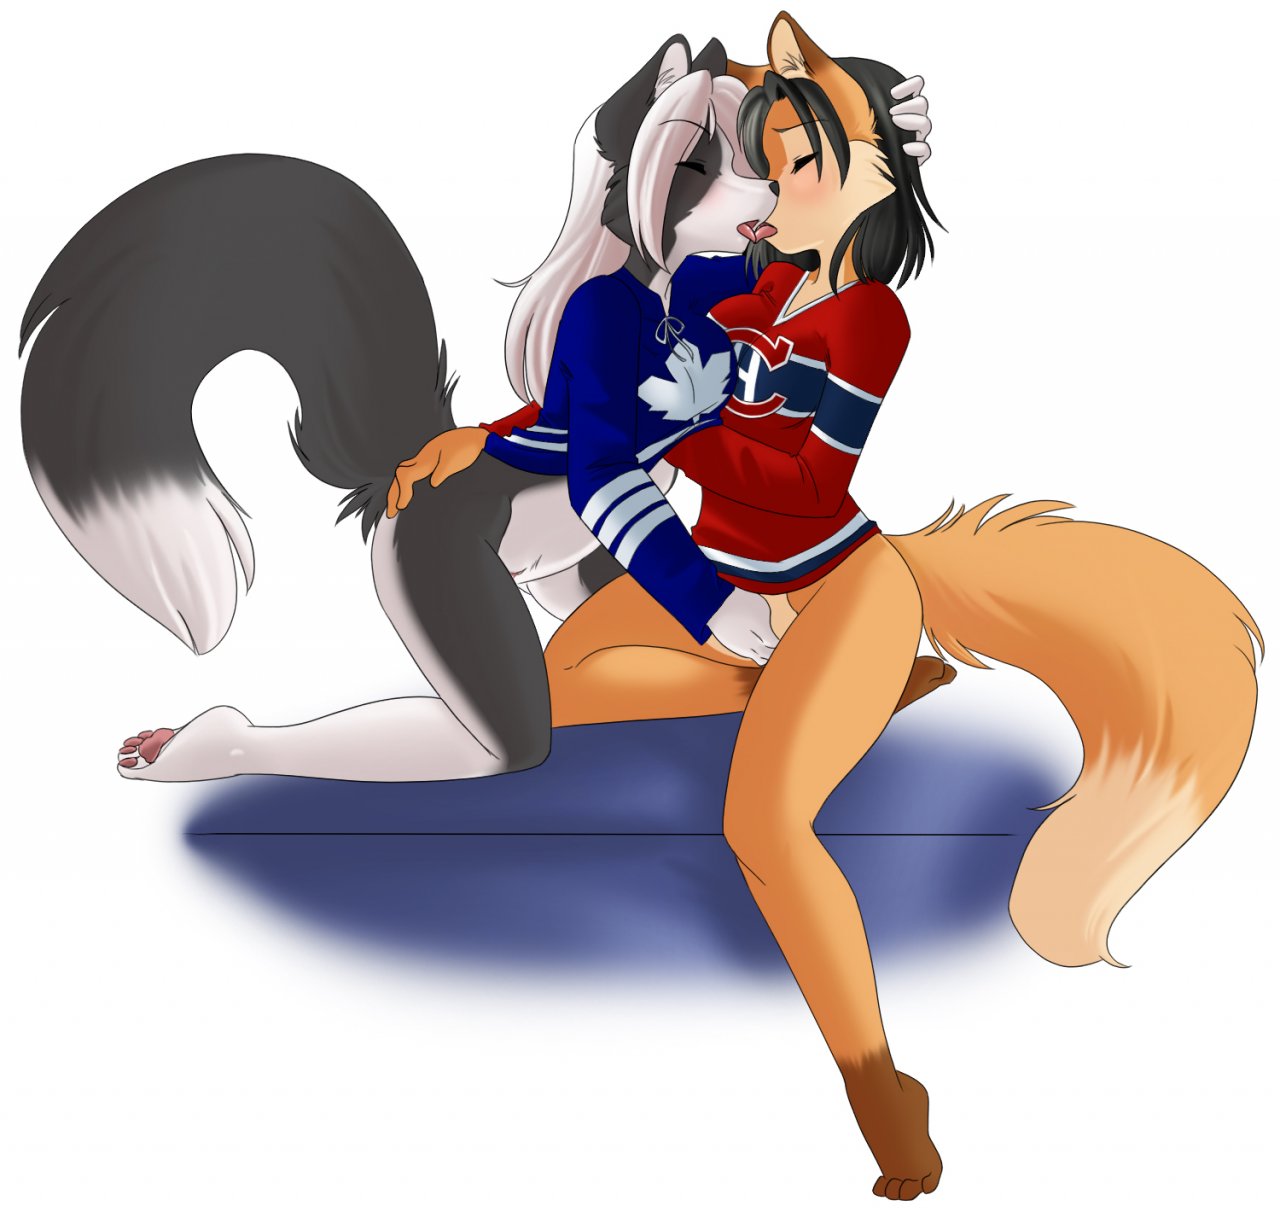 Sexy Furry Lesbian Yuri Feet - random hentai and furry - Page 6 - HentaiEra